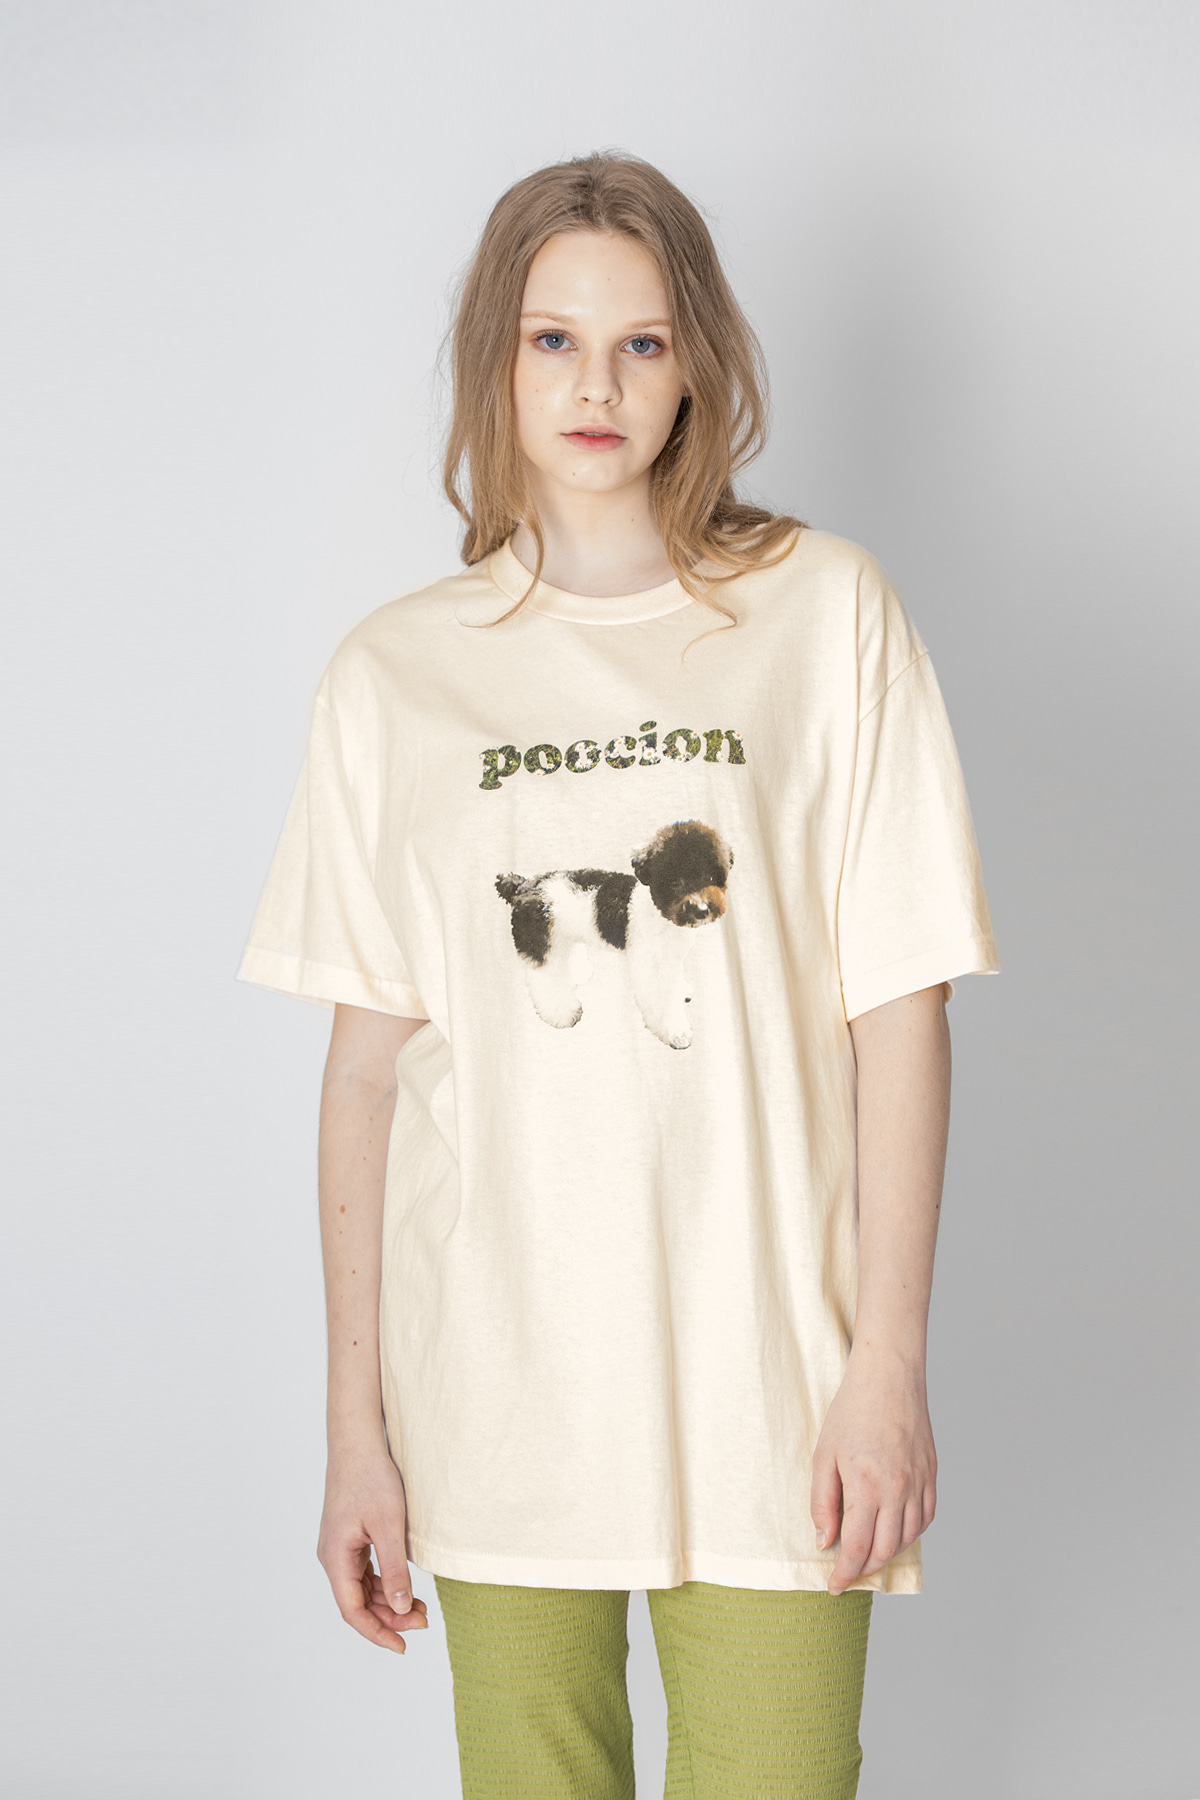 POOCION Twin T-shirt (Ivory)